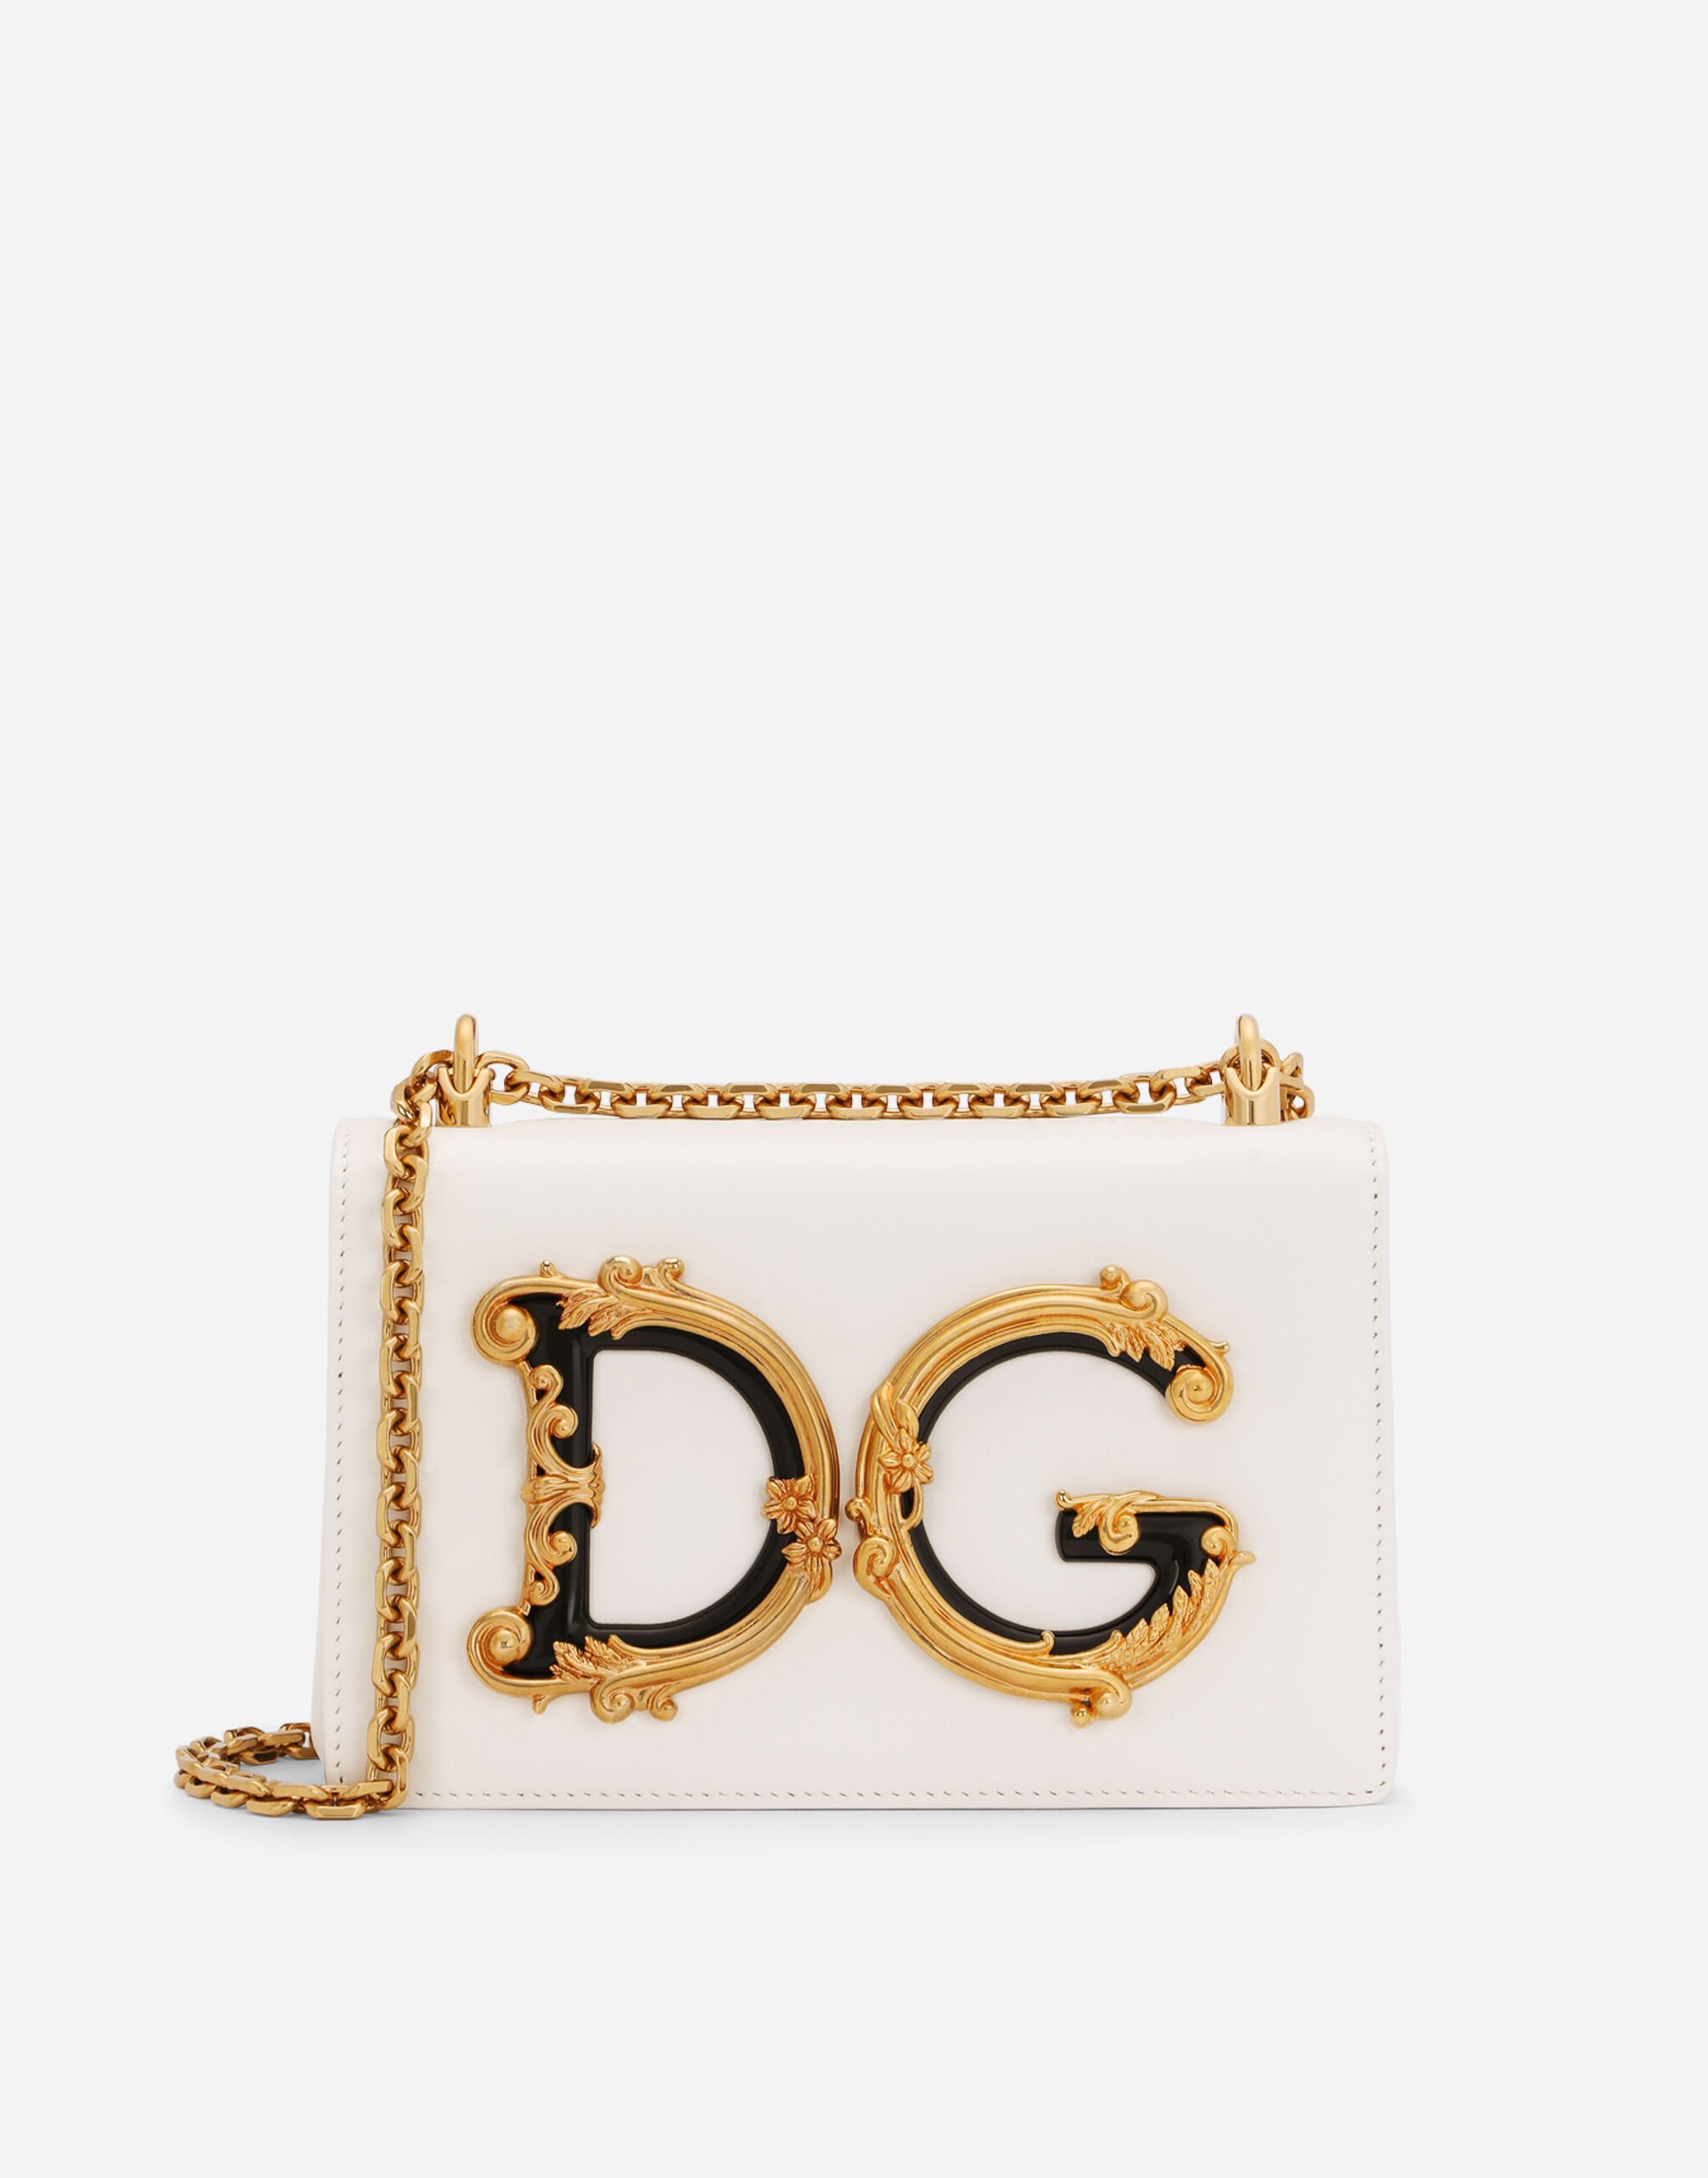 Dolce & Gabbana DG GIRLS ショルダーバッグ ナッパレザー マルチカラー BB6498AS110